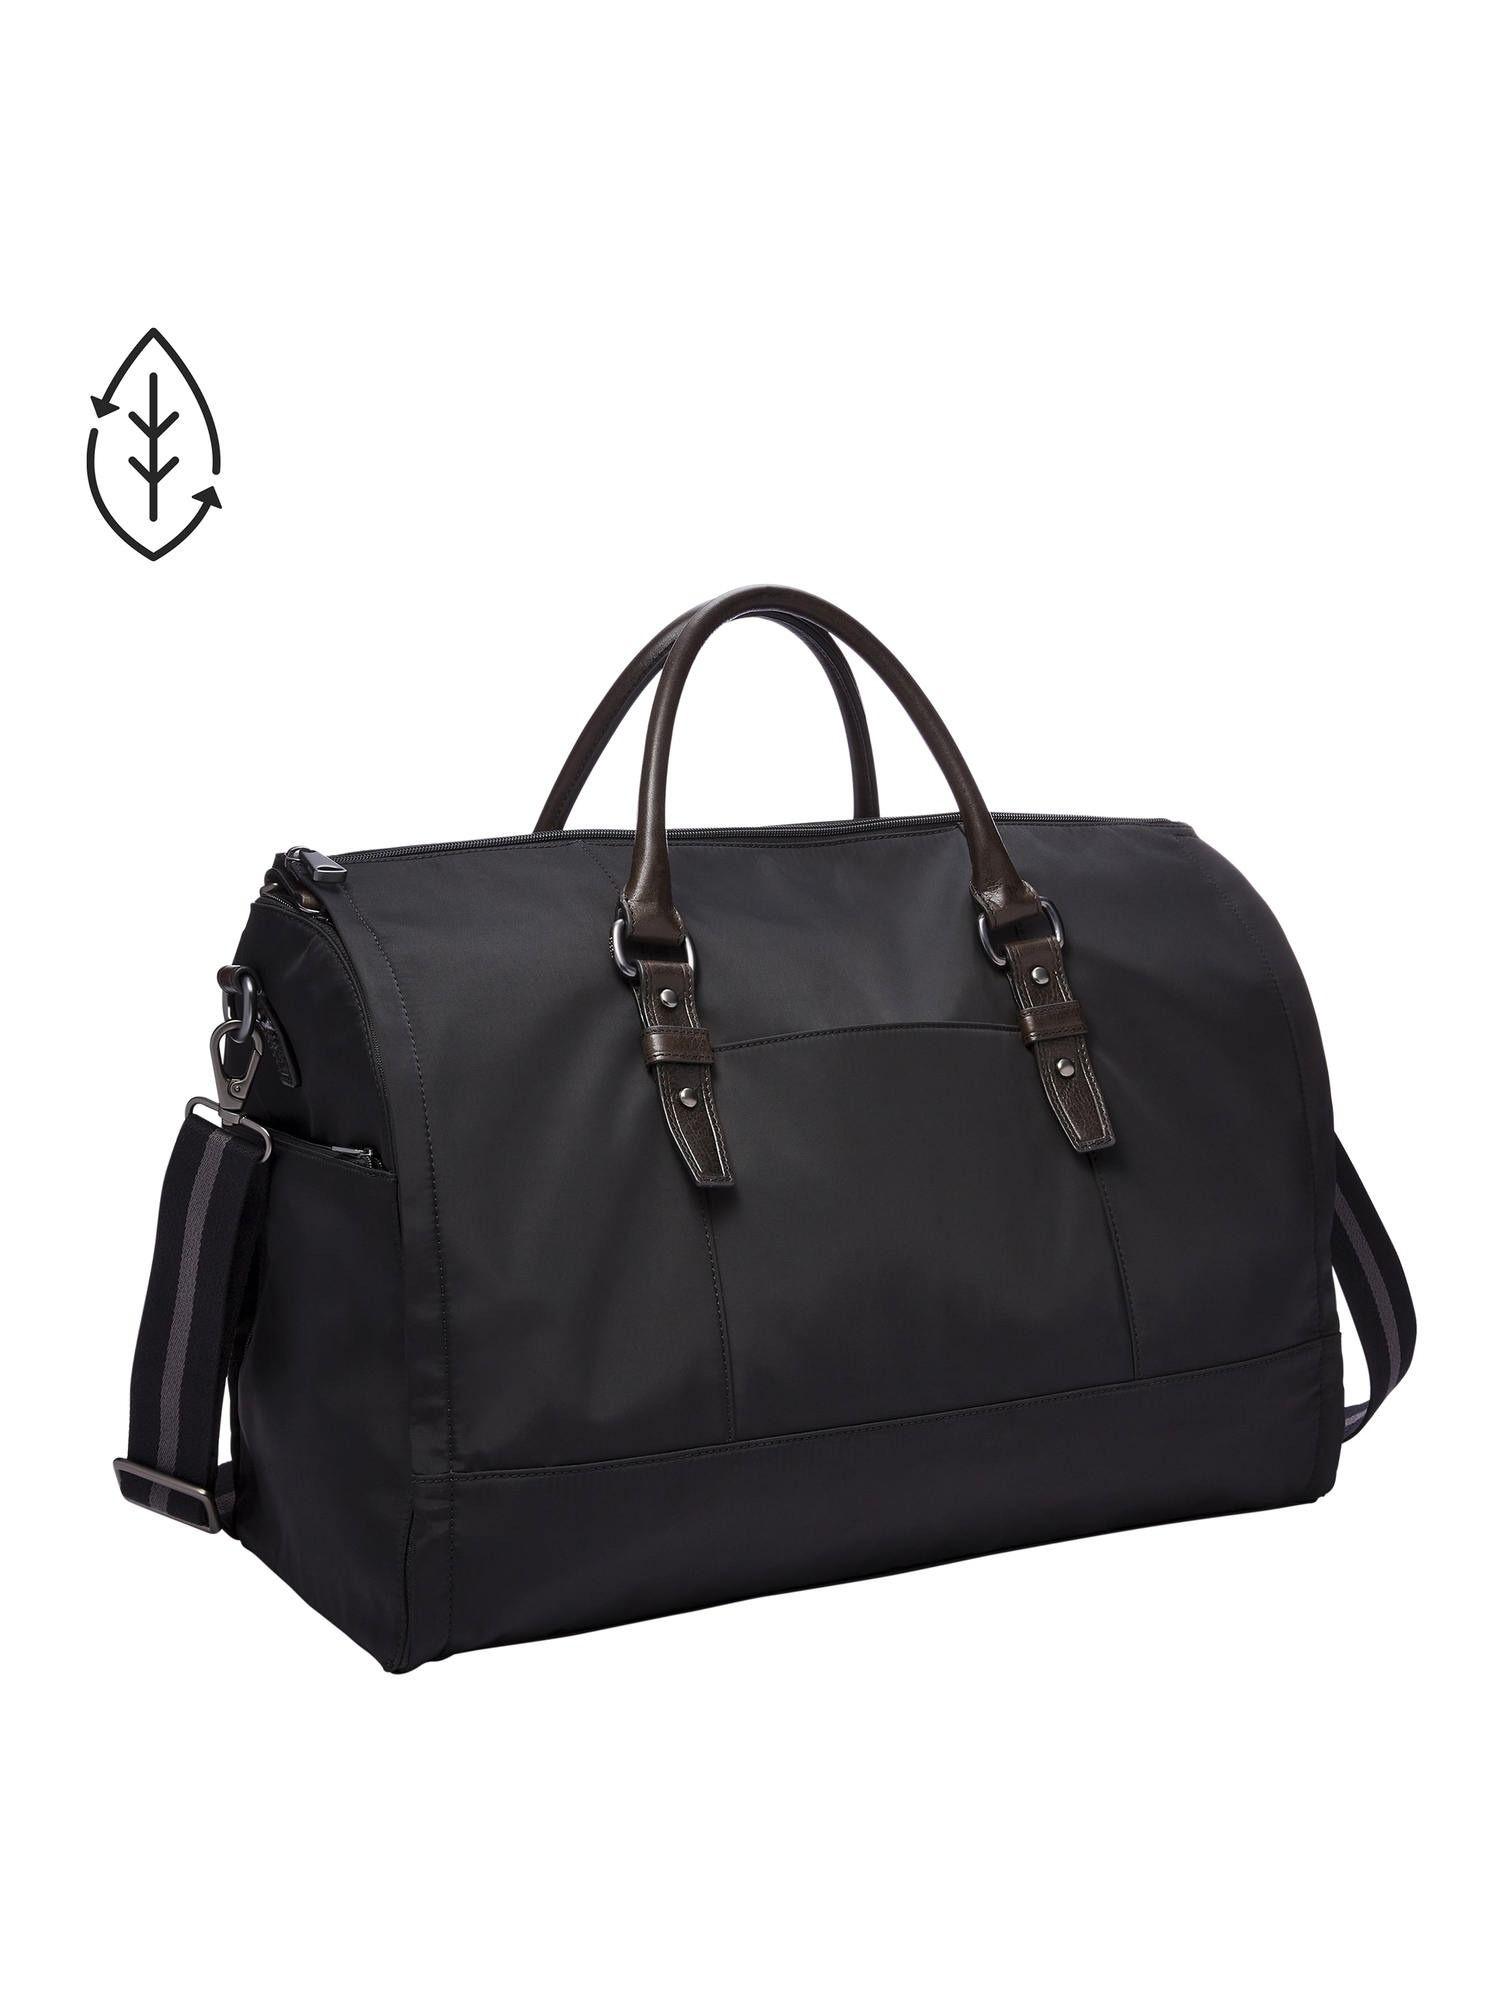 dillon black handbags bag mbg9574001